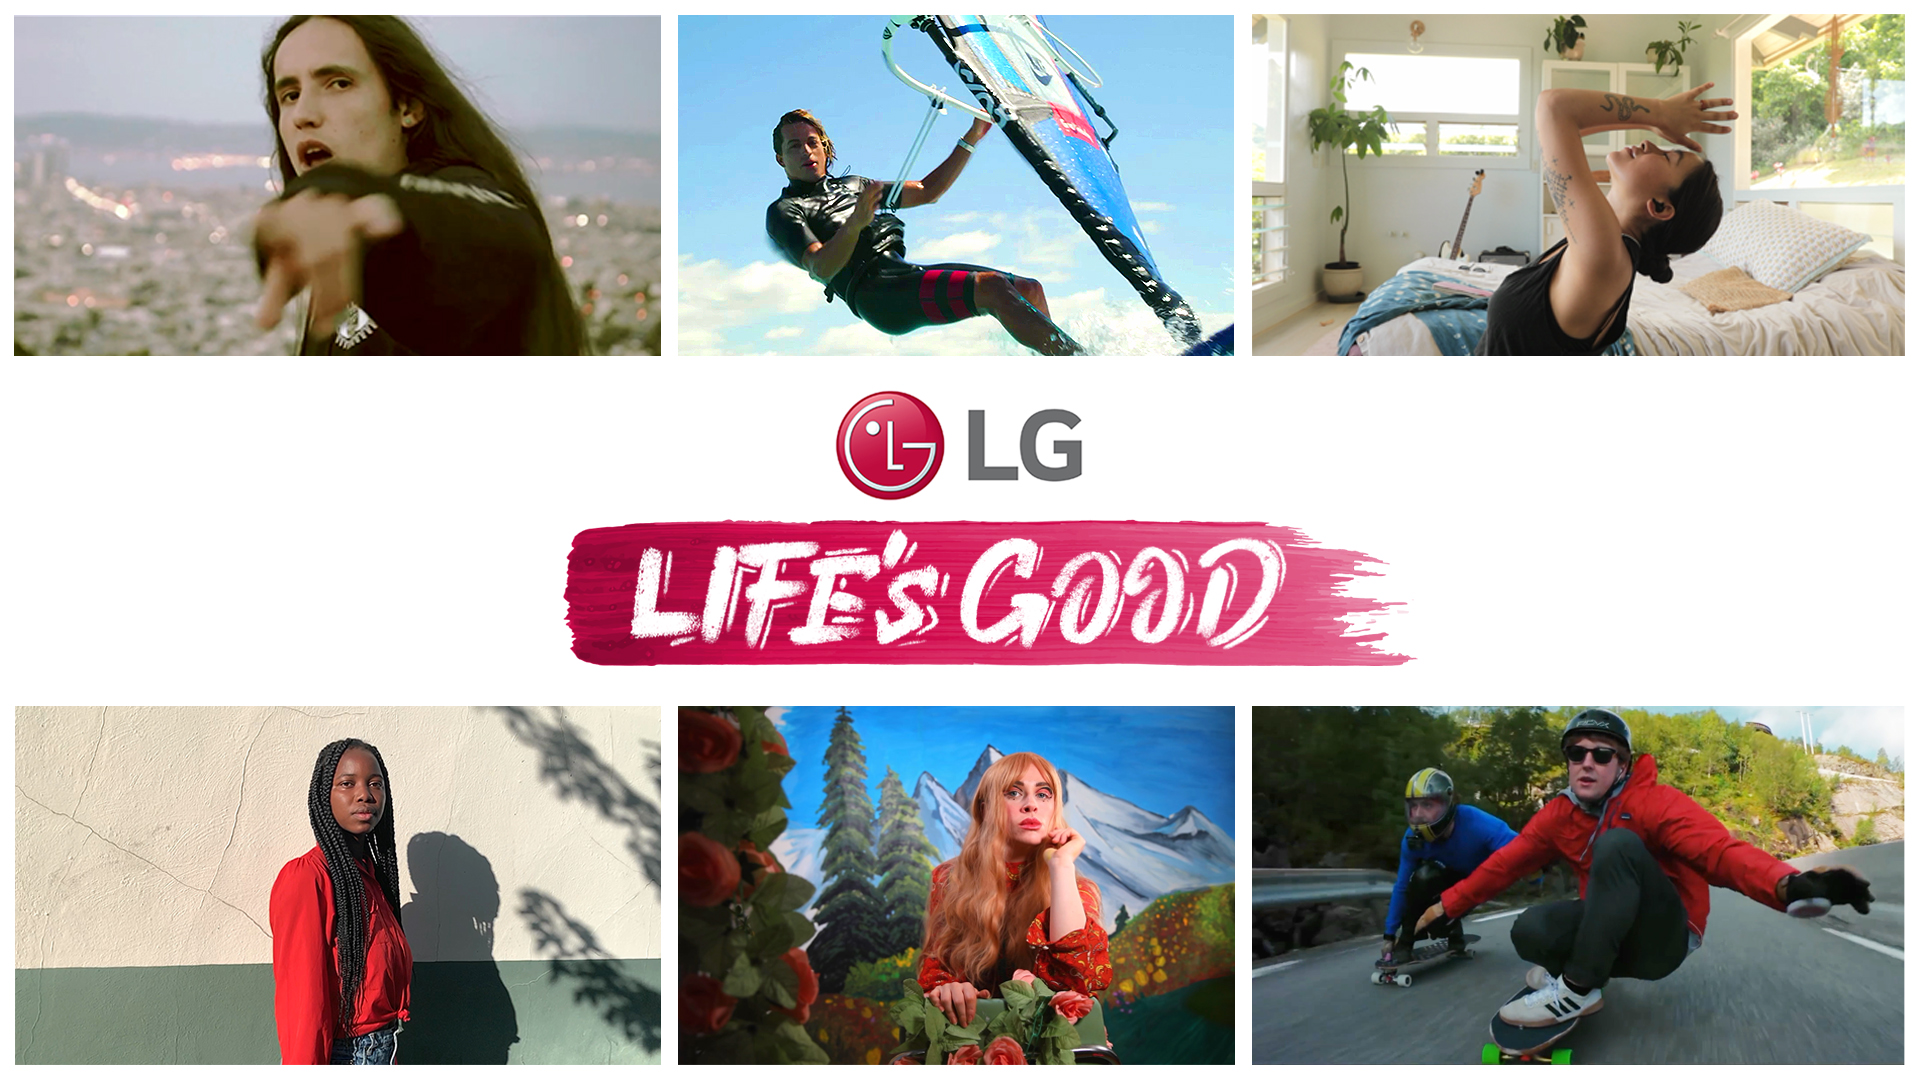 MZ세대와 소통하는 ‘Life’s Good’ 캠페인